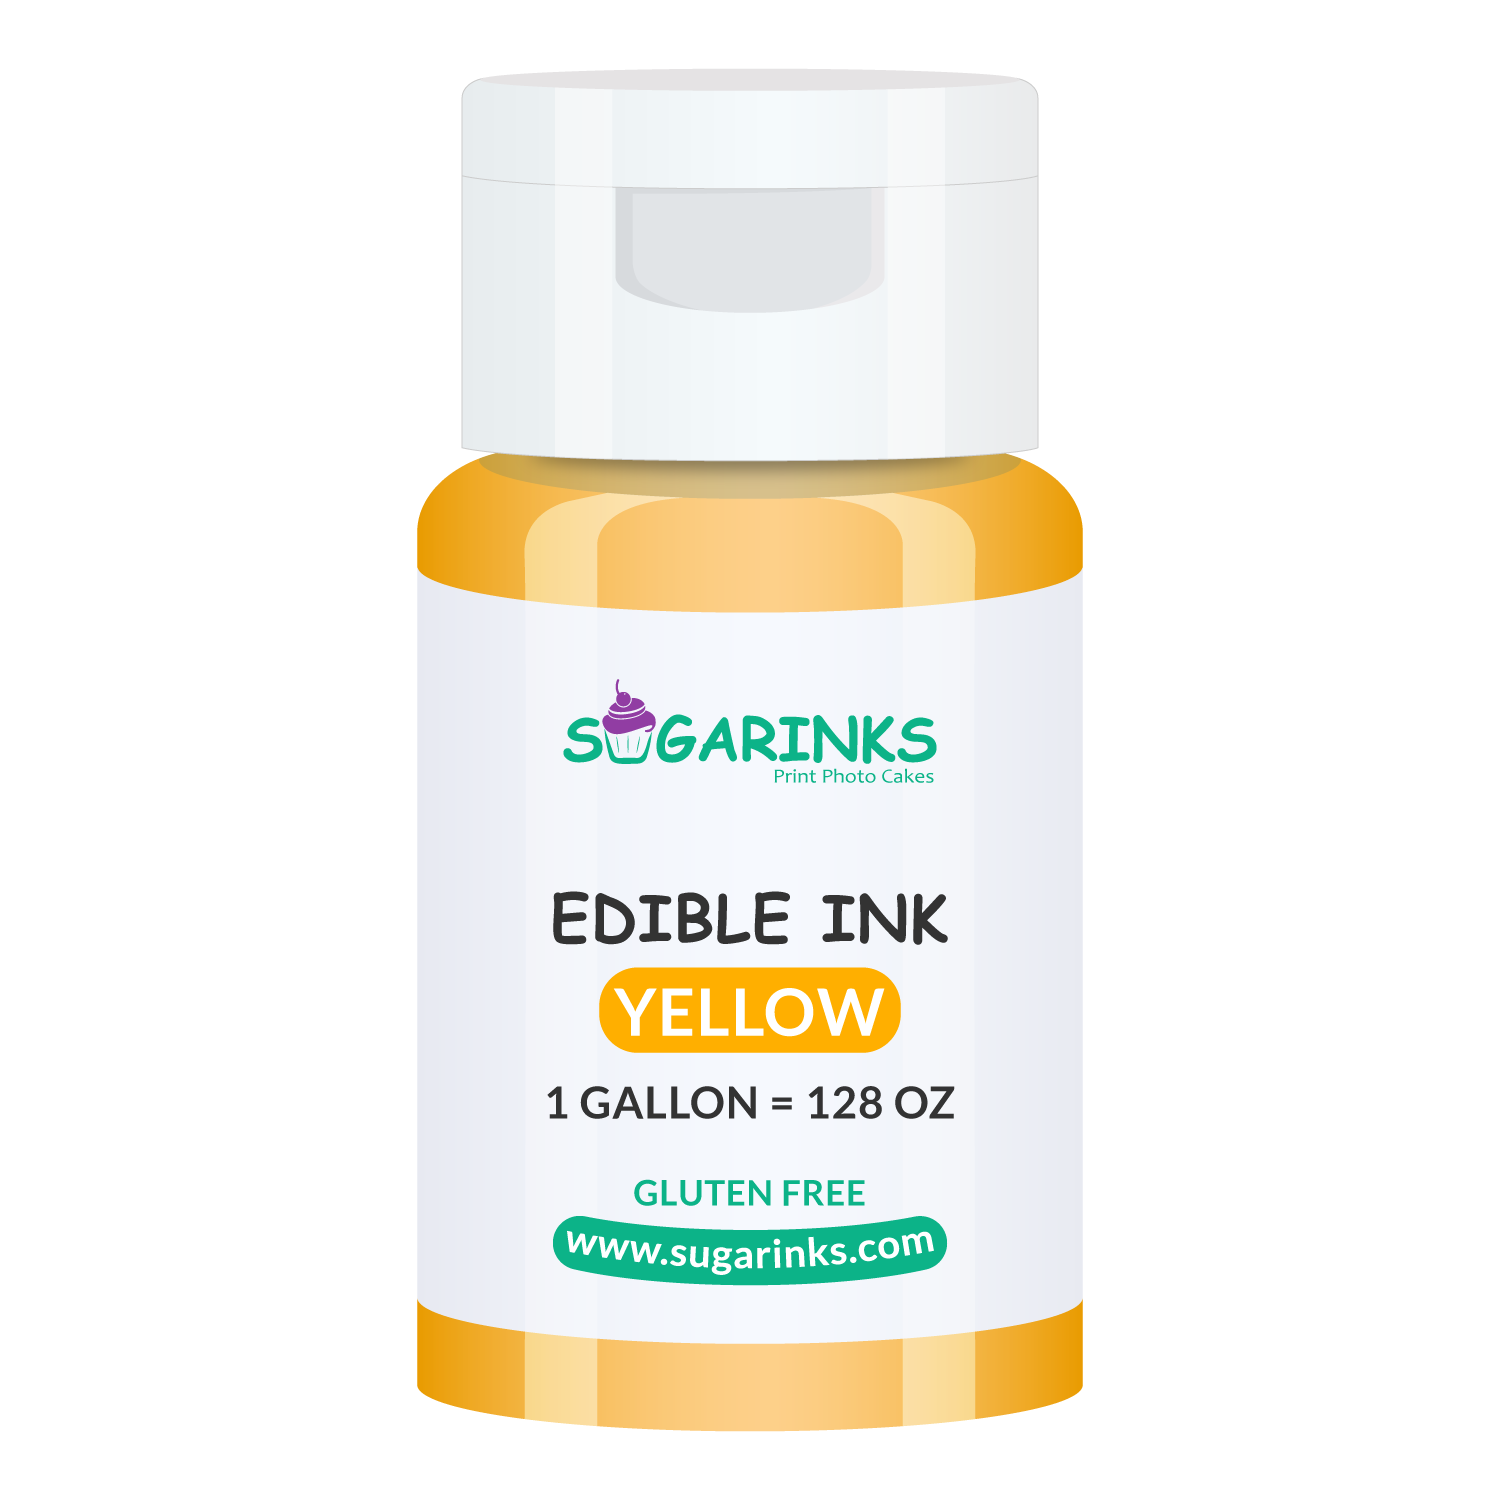 Sugarinks Edible Ink Refill for Canon Edible Printers (1 Gallon/128Oz) – Yellow